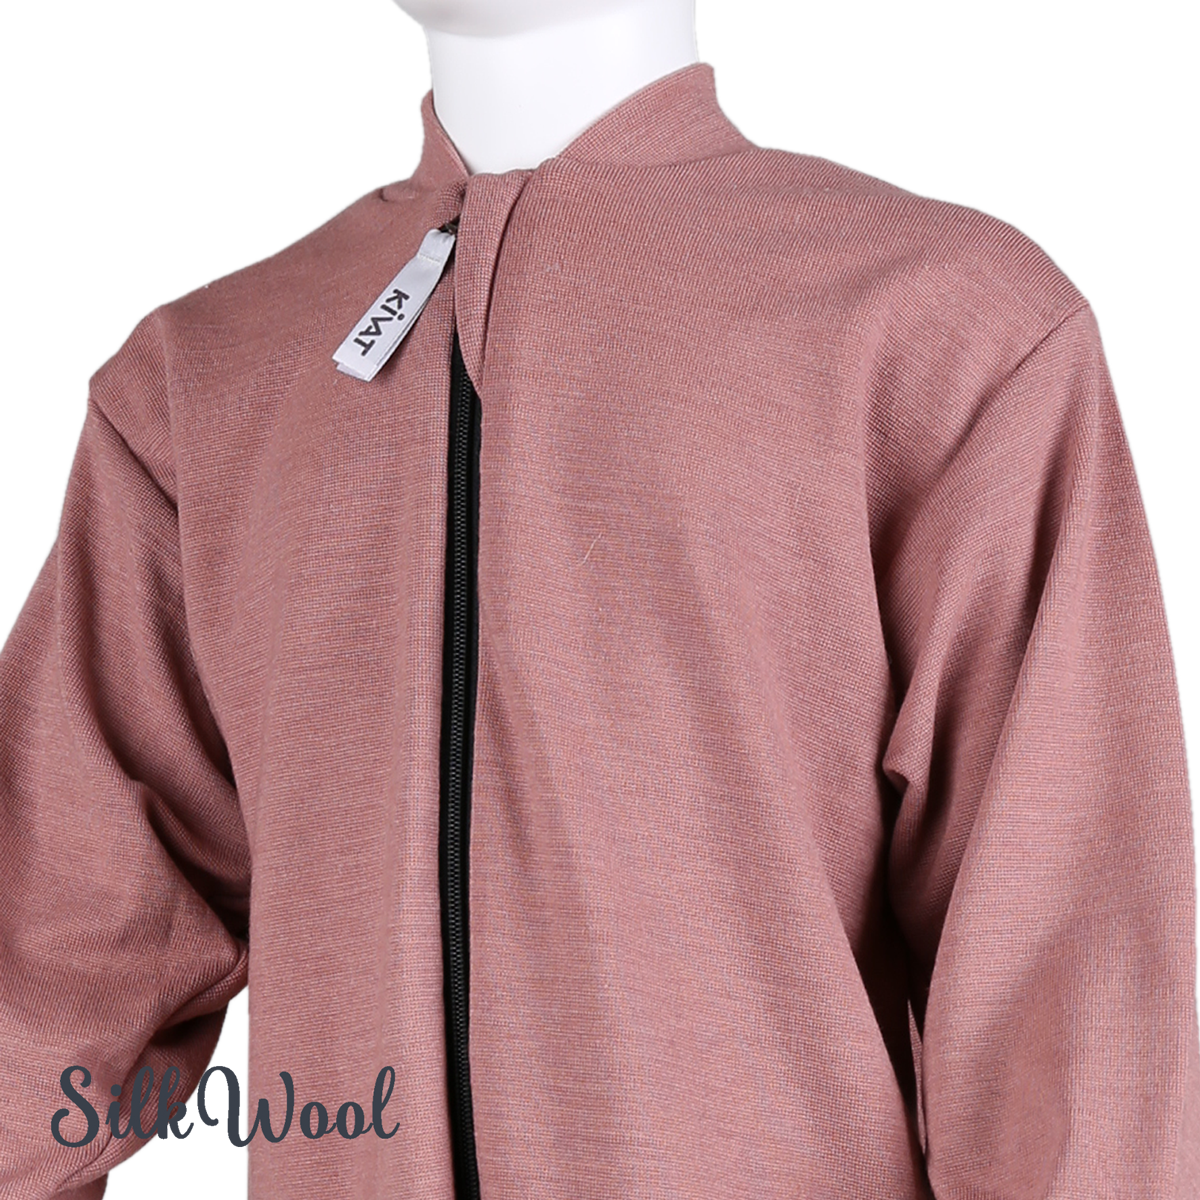 Silkwool overall